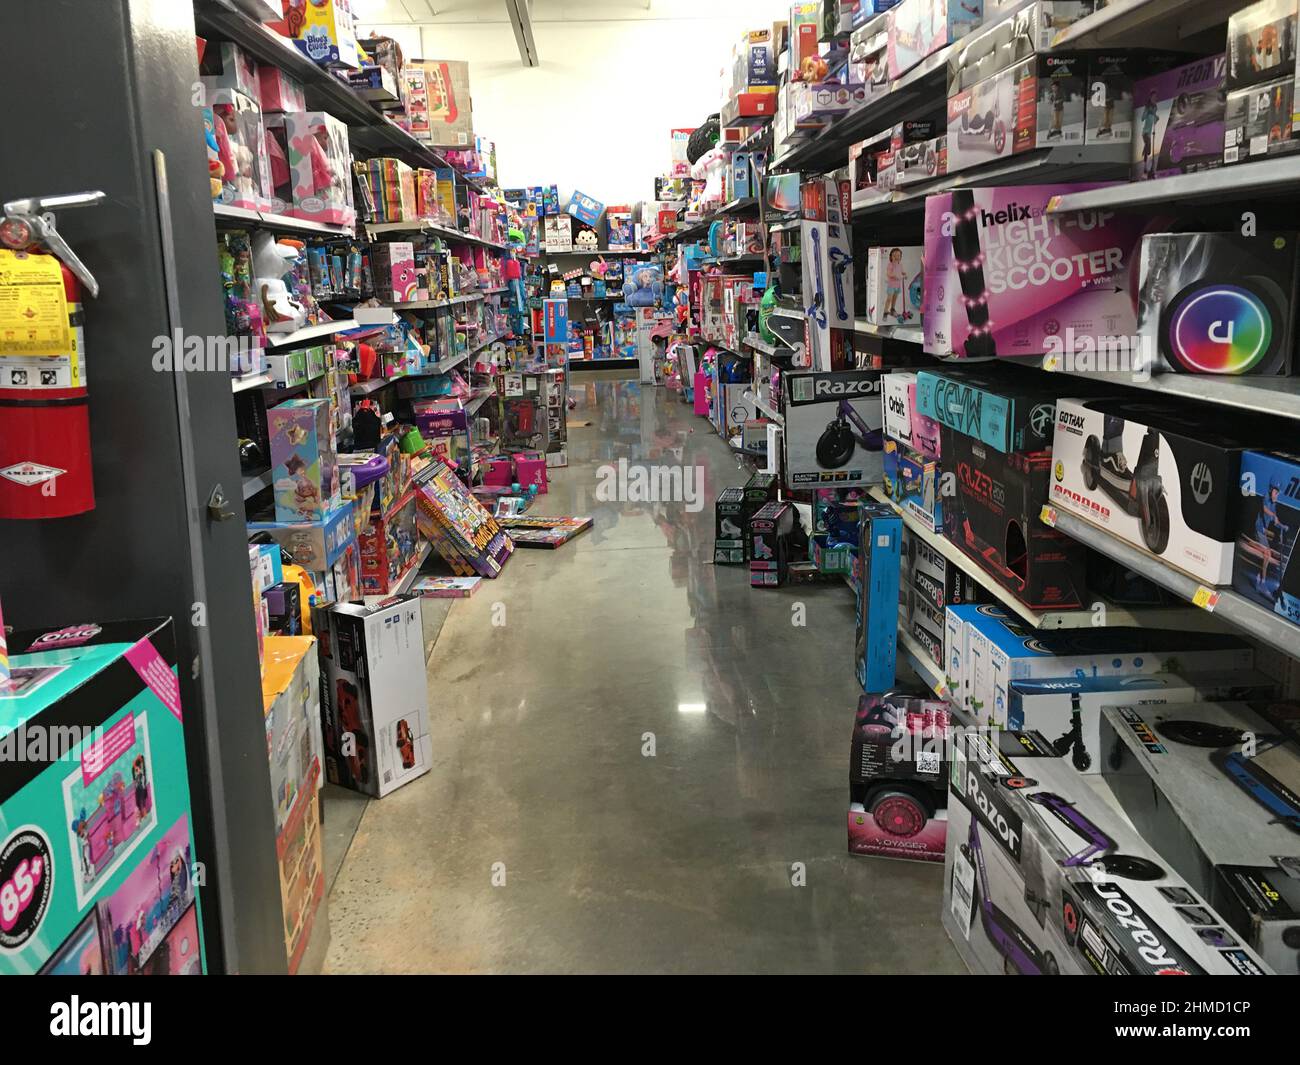 Augusta, Ga USA - 12 20 20: Walmart interior junky messy toy aisle items on floor trip hazard Stock Photo